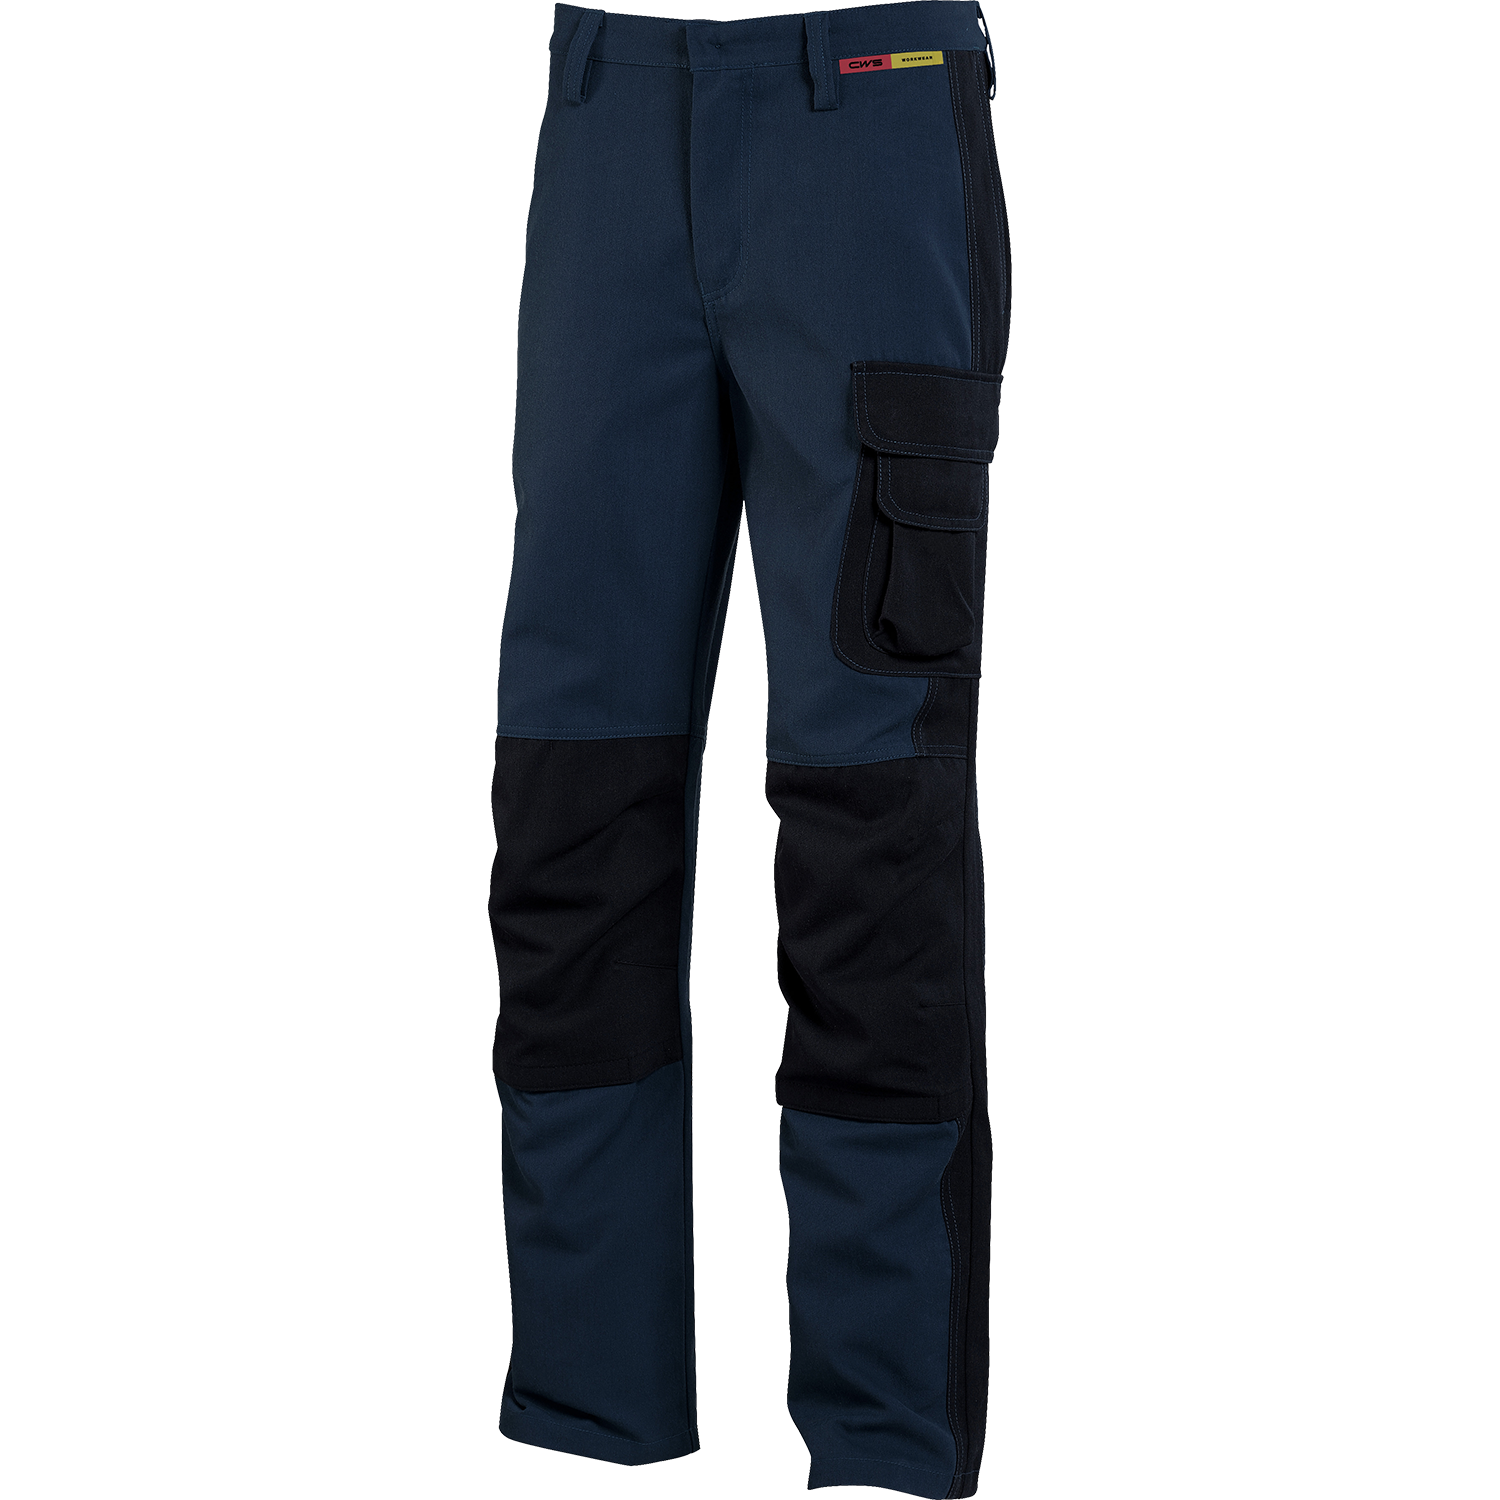 CWS Profi Line Protection: Trousers | CWS